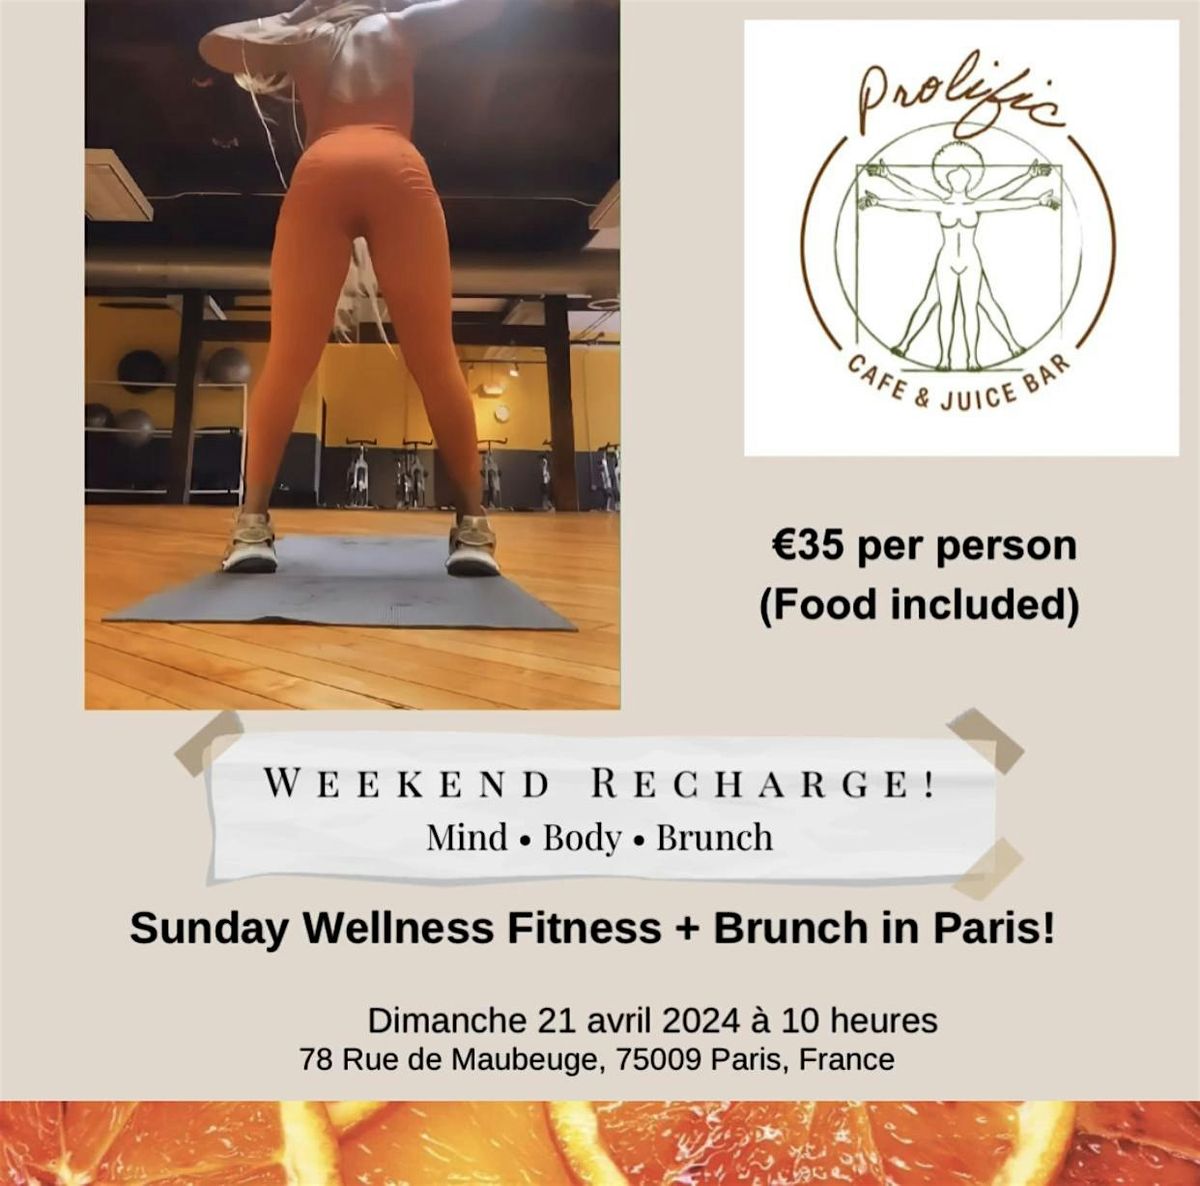 Sunday Wellness Fitness + Brunch in Paris!